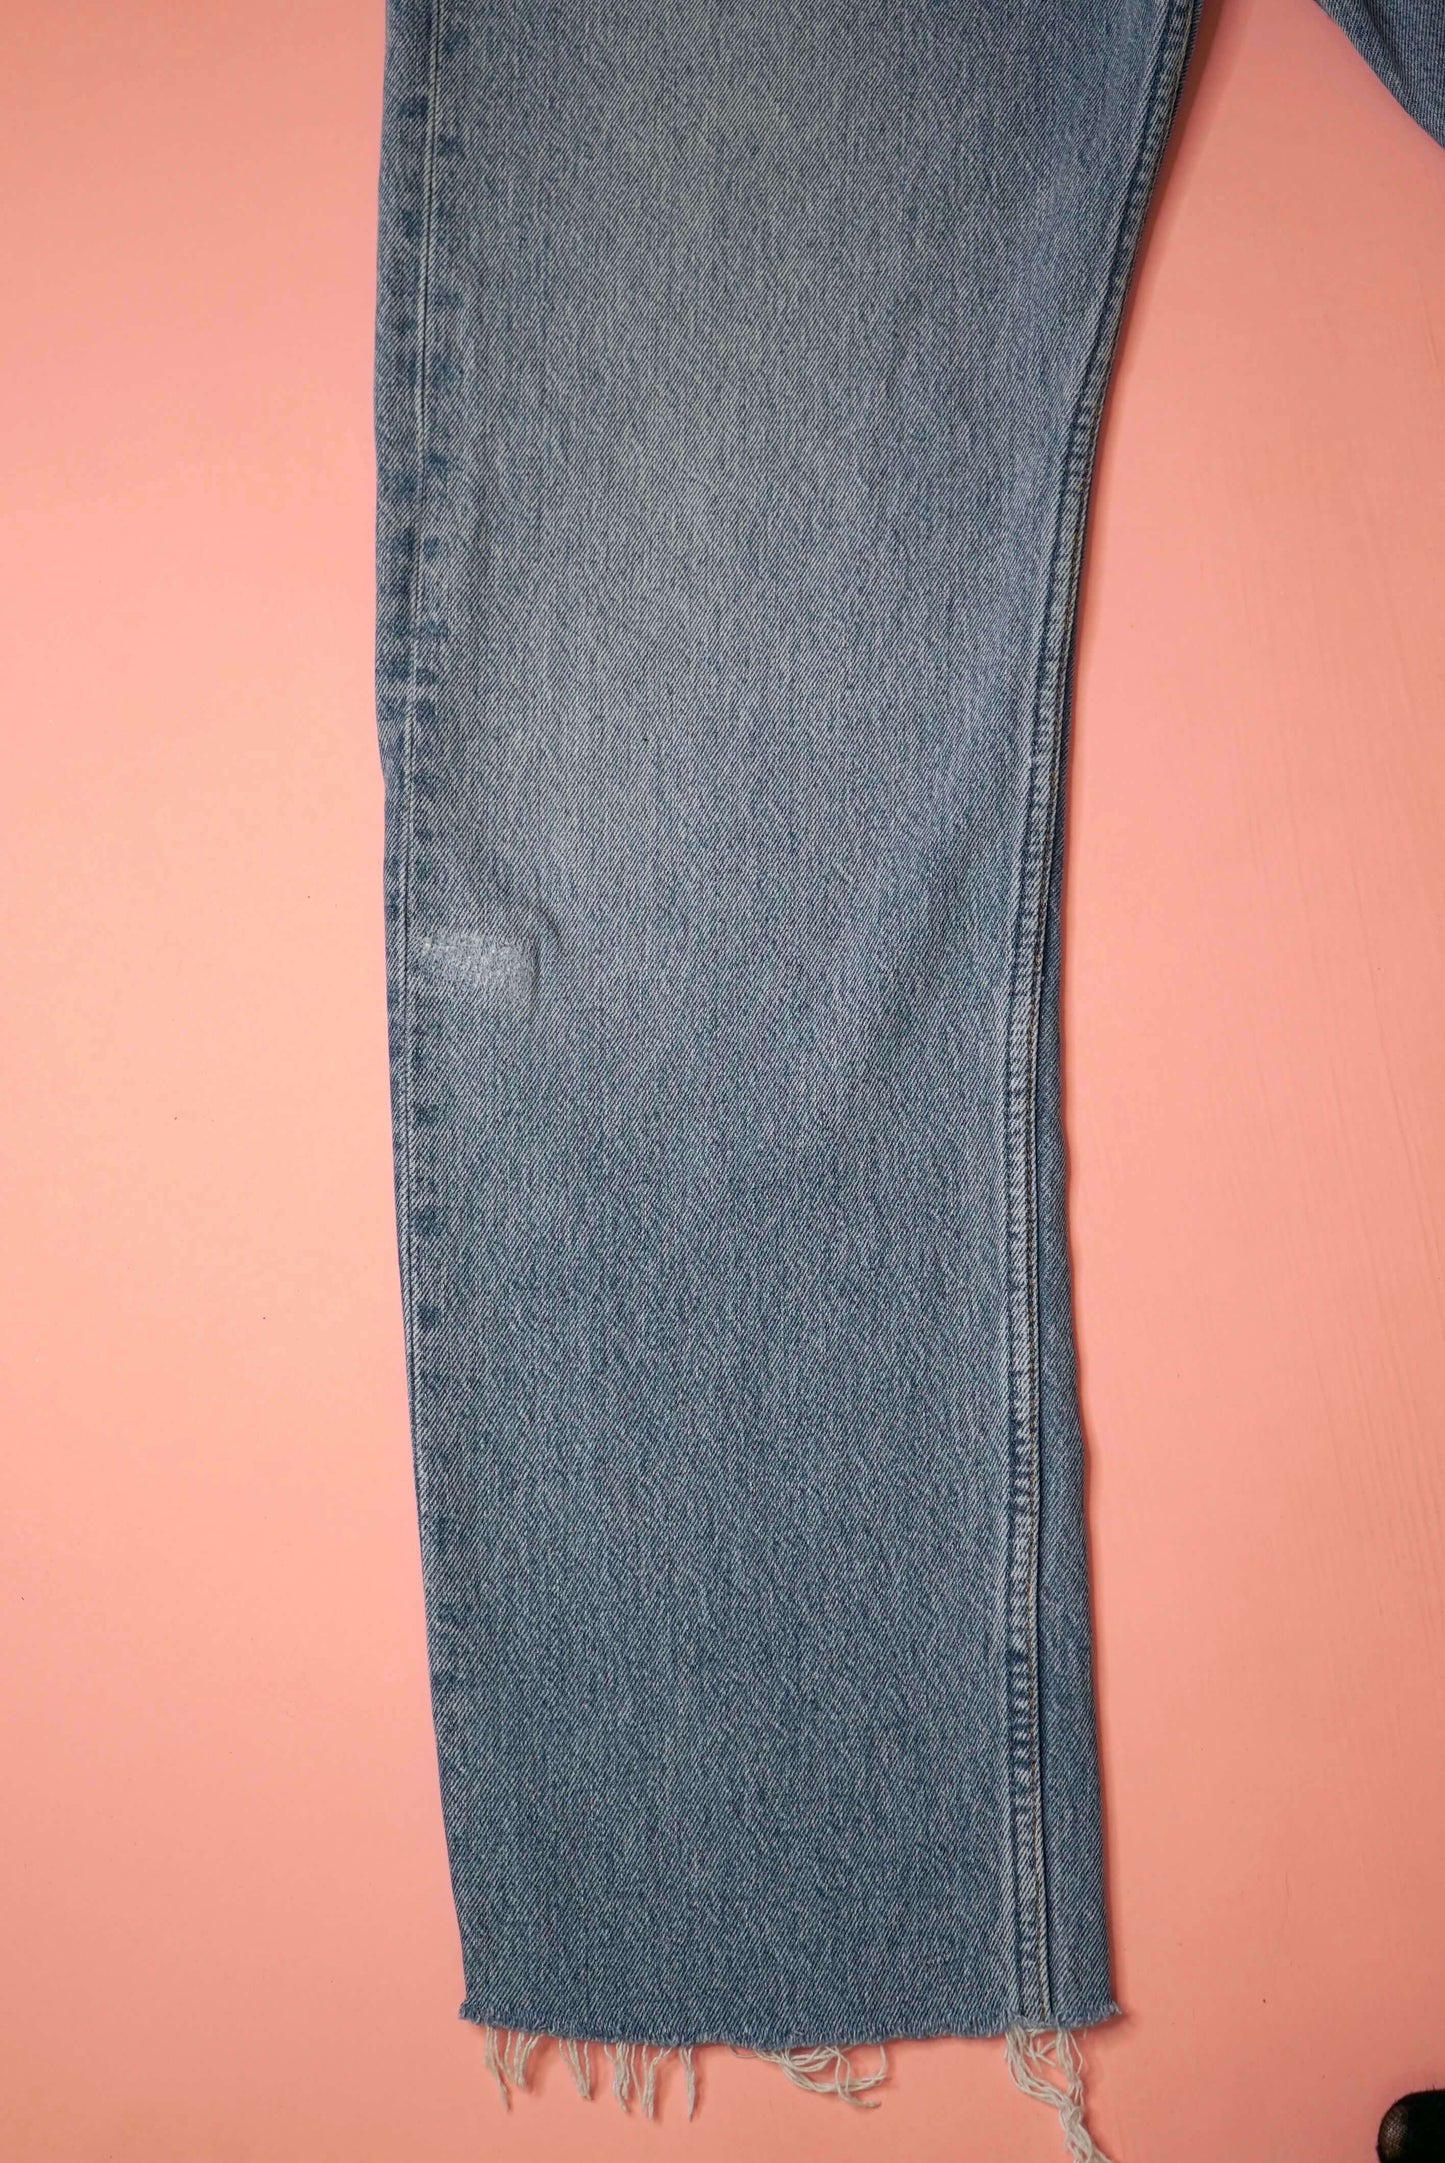 Vintage Levis 501 Jeans W33-34 Medium Blue Raw Hem